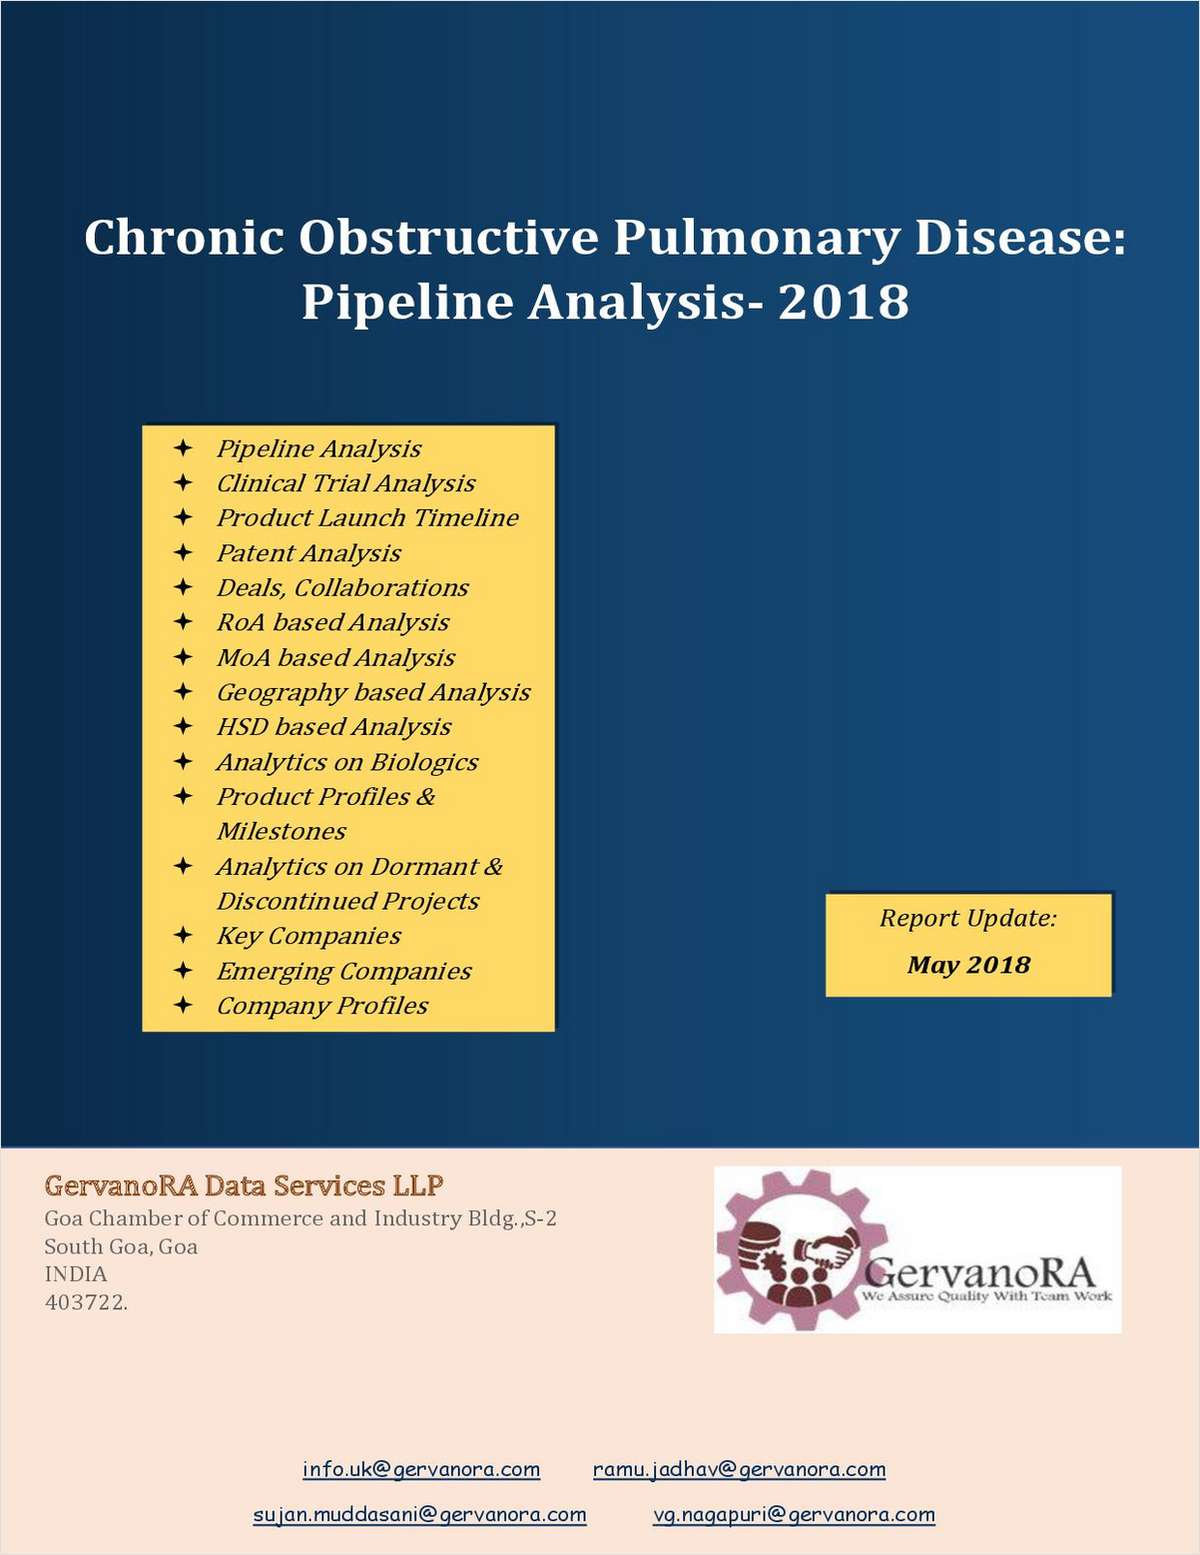 Chronic Obstructive Pulmonary Disease- Pipeline Analysis 2018